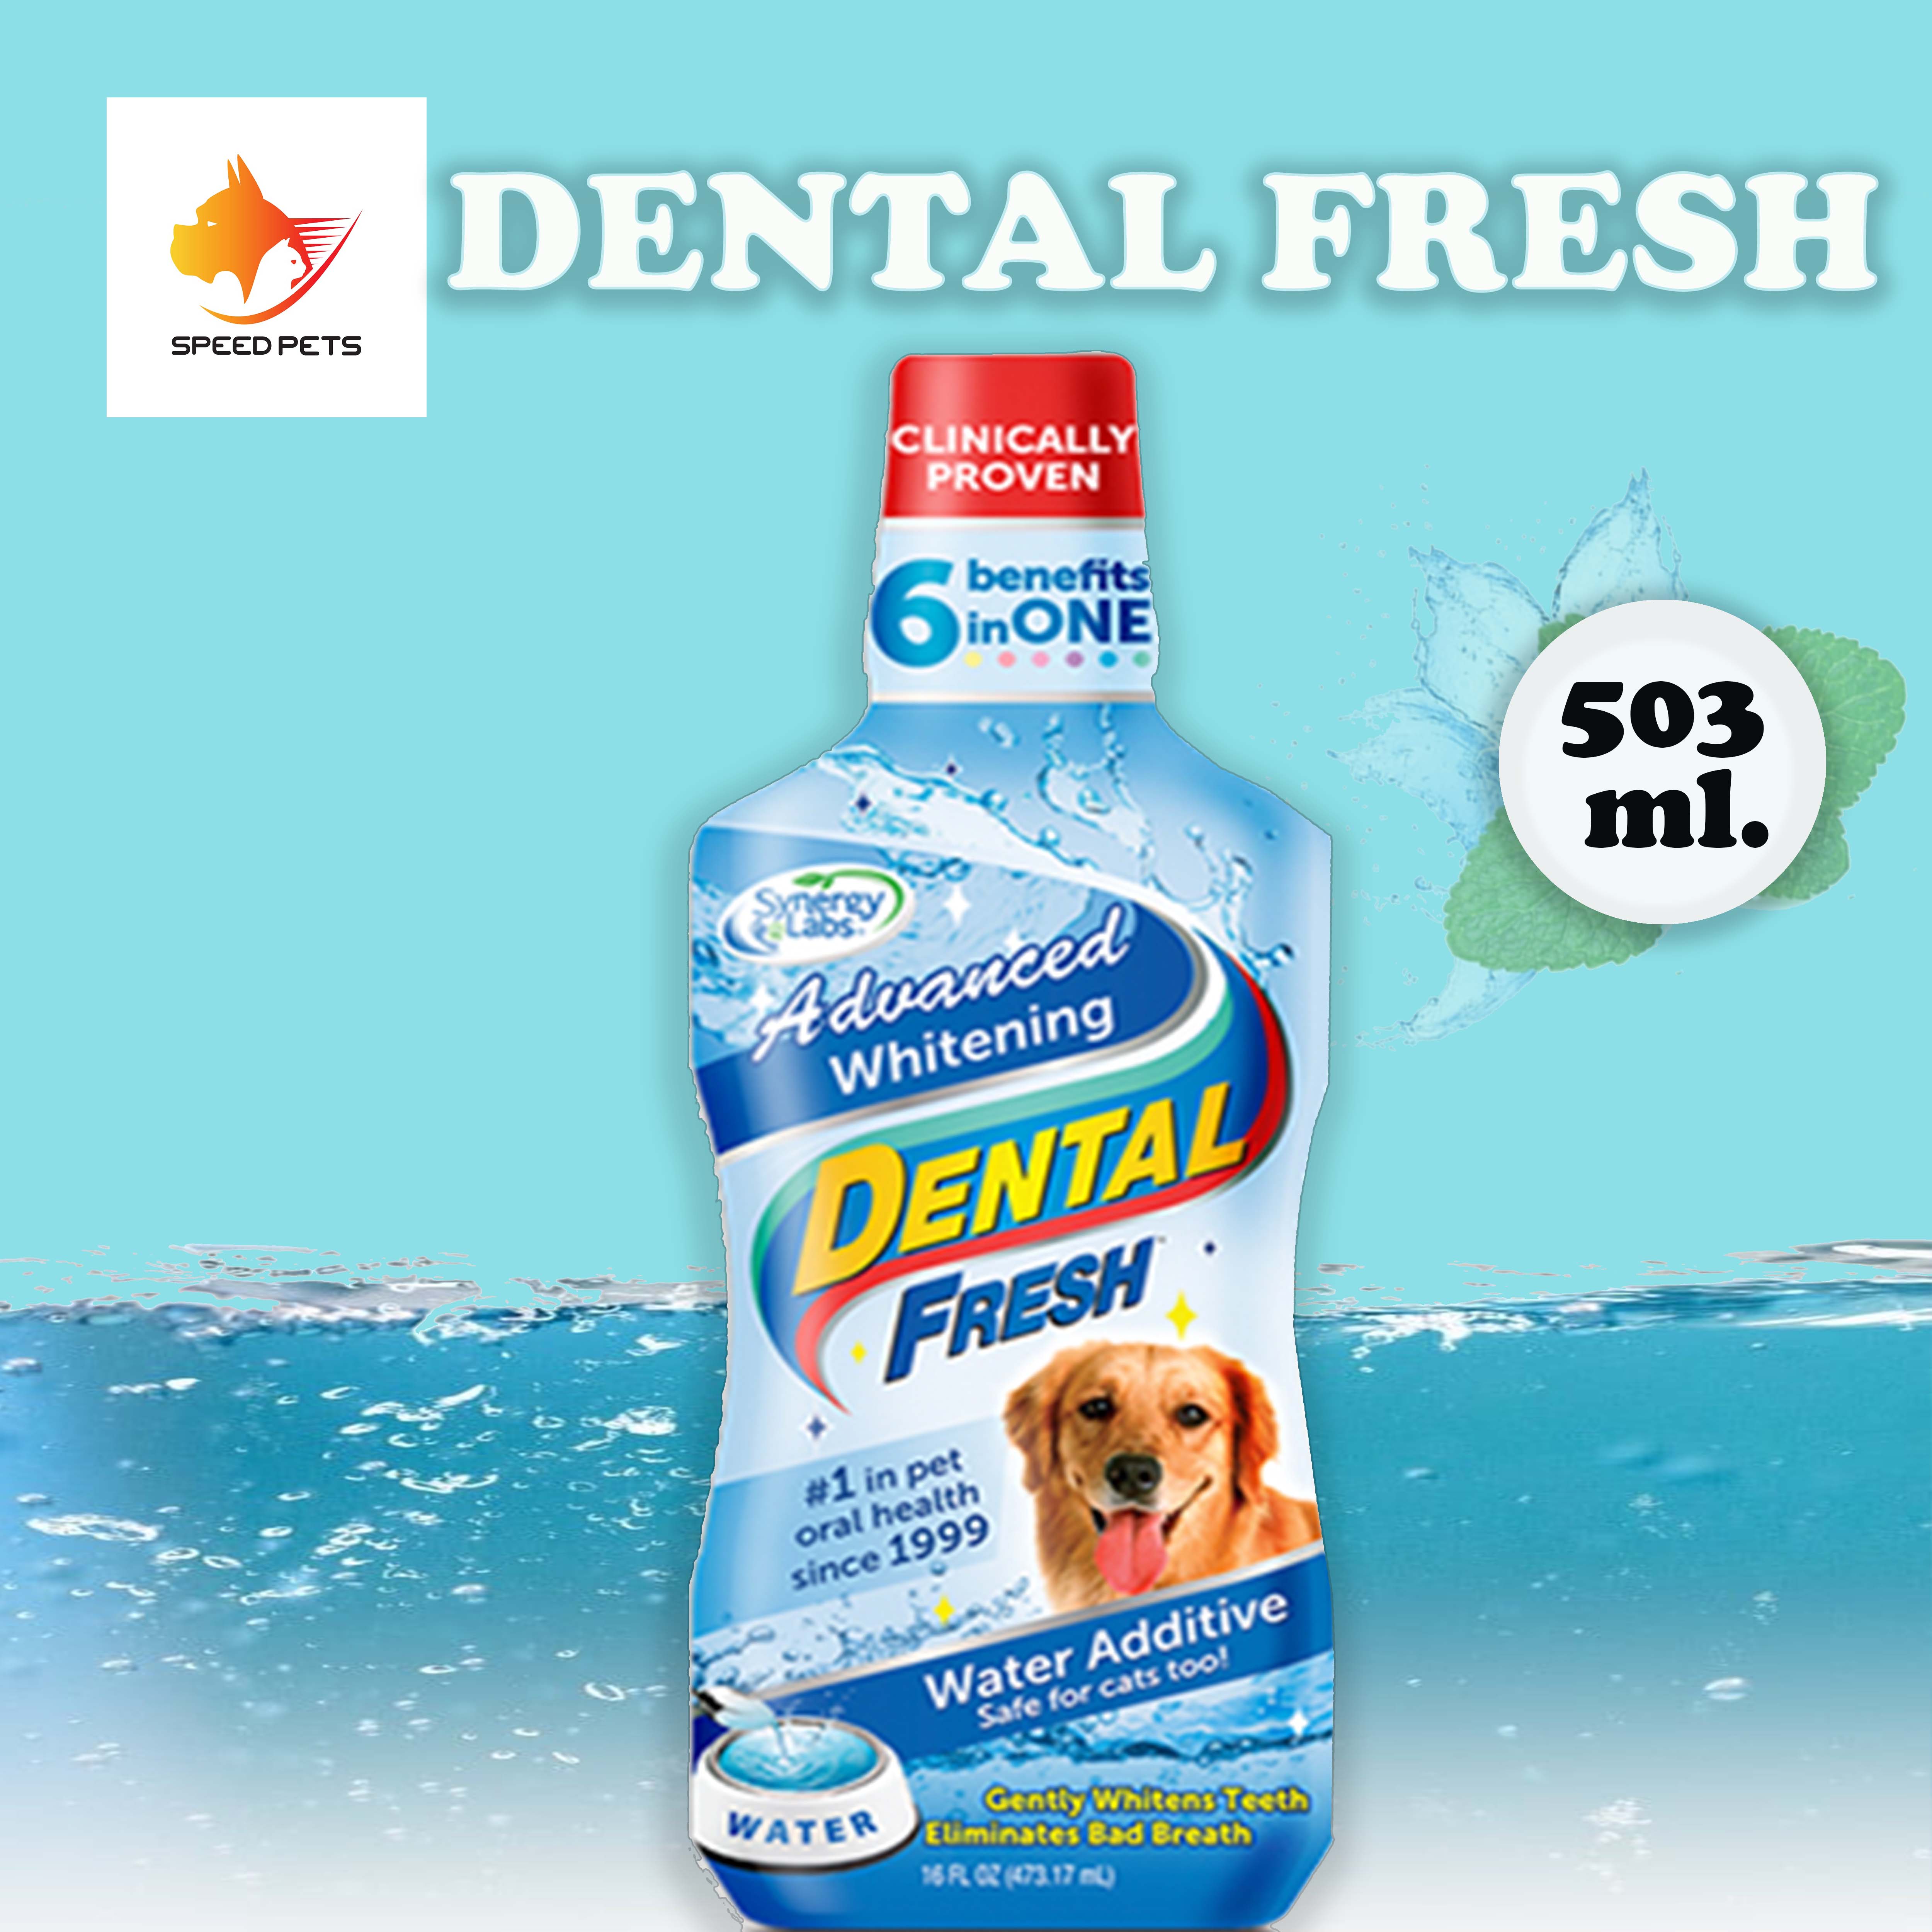 Dental Fresh Water น้ำยา ดับกลิ่นปาก ผสมน้ำ สุนัข สูตร whitening 503ml